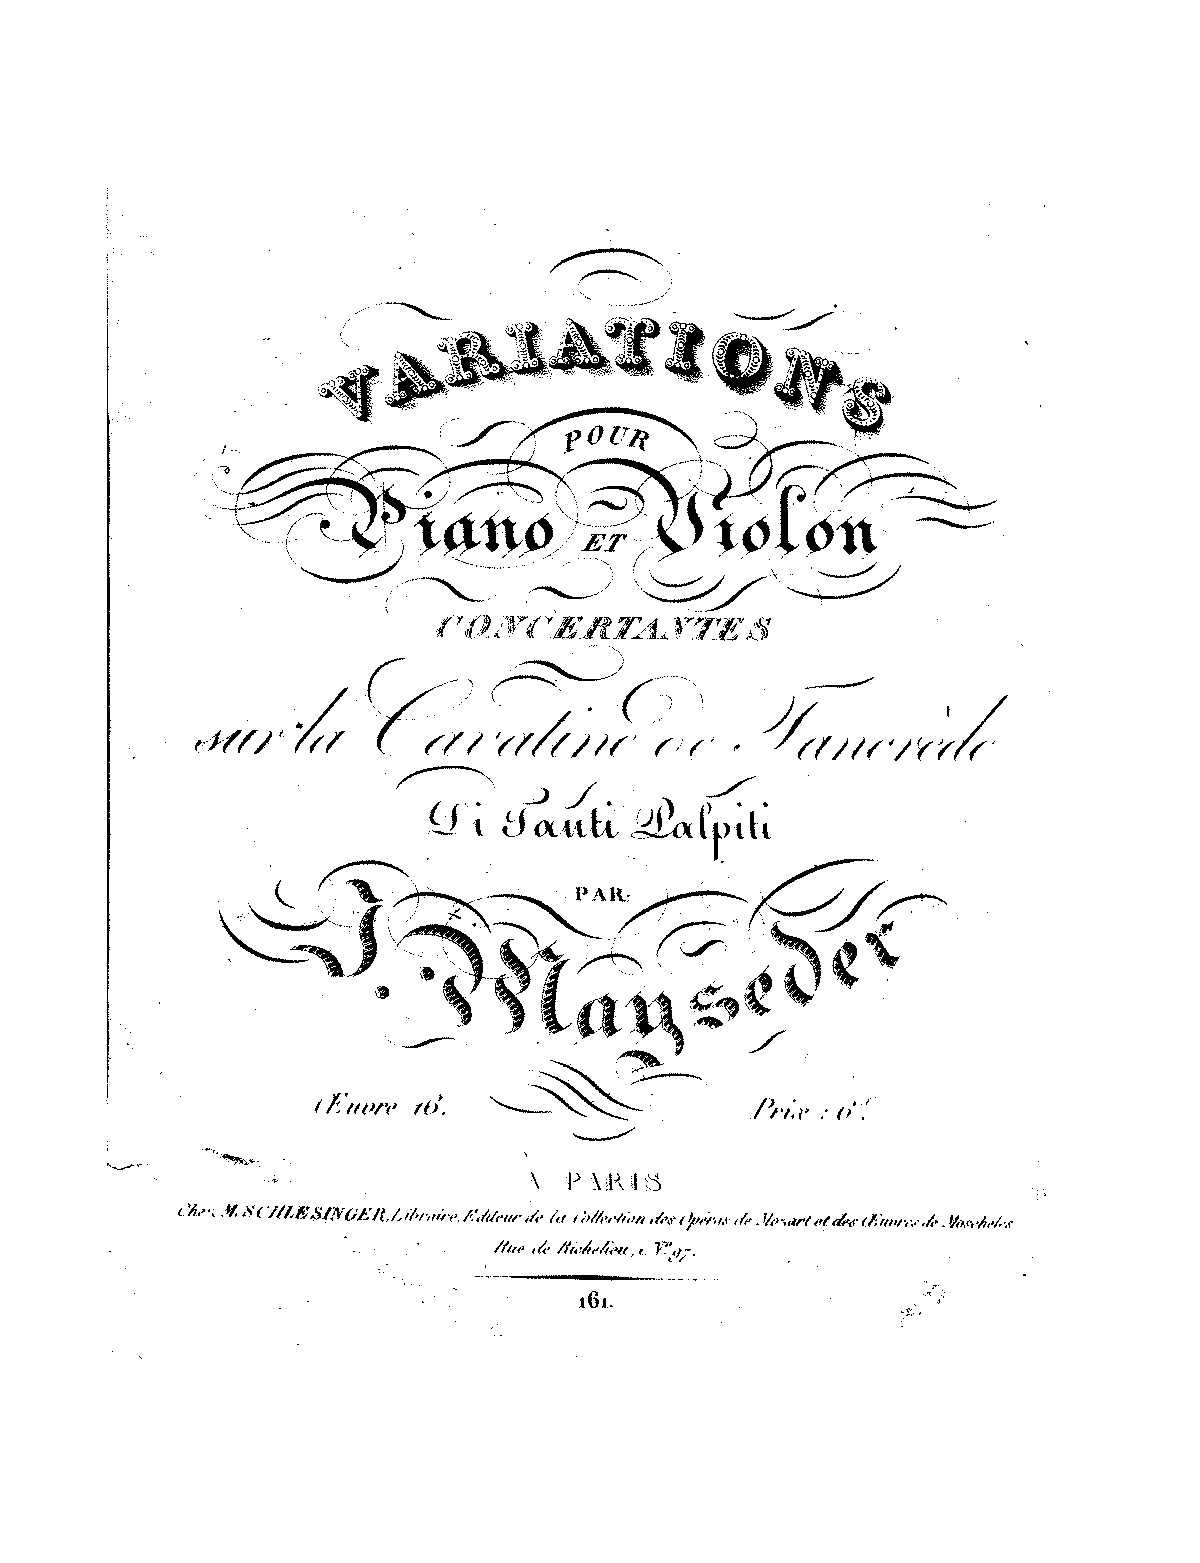 Variations on the Cavatine from Tancredi, Op.16 (Mayseder, Joseph) - IMSLP